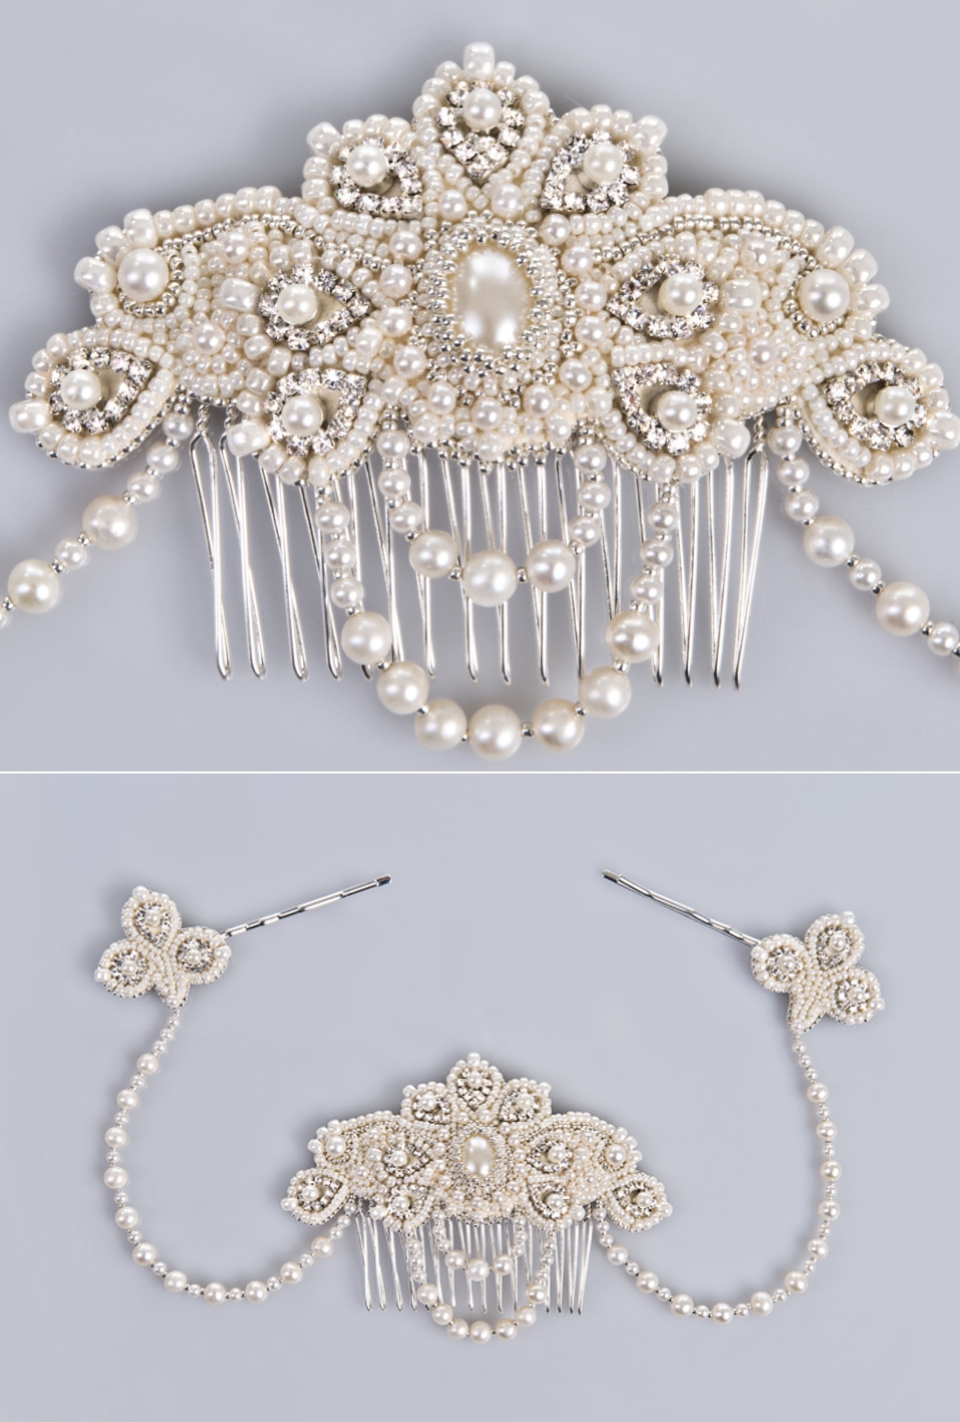 1-Petite Lumière bridal wear and accessories